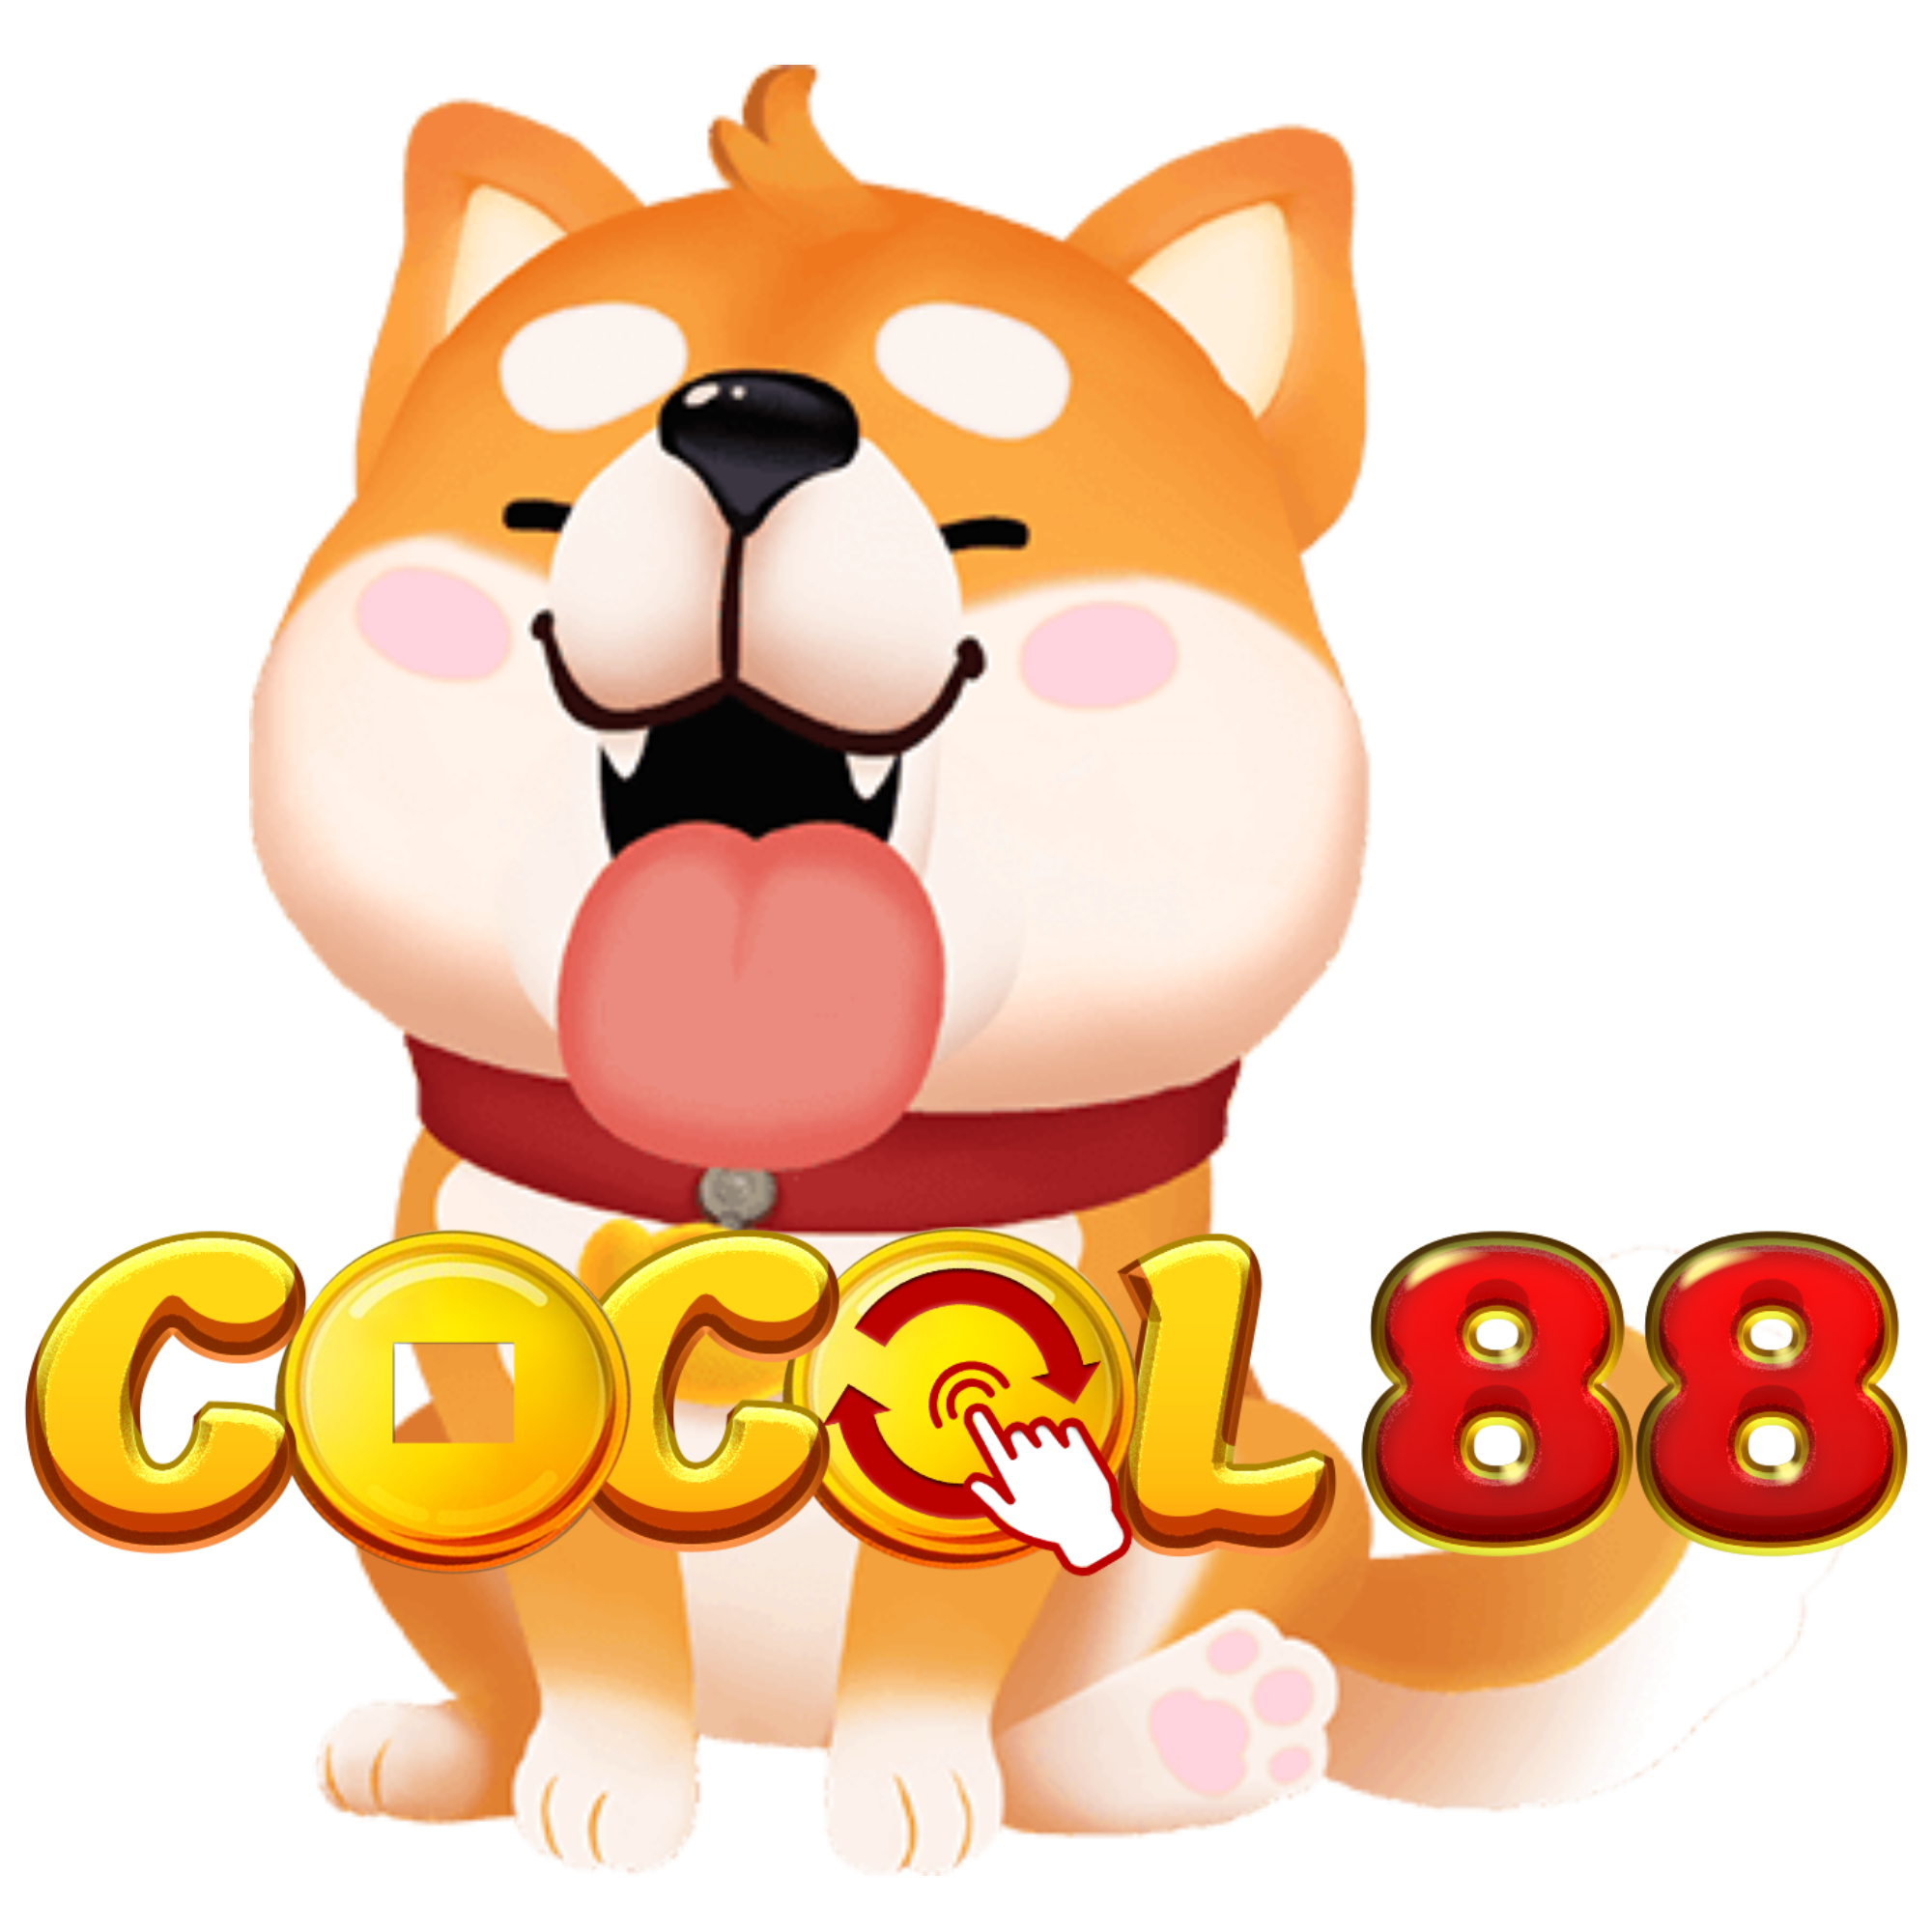 COCOL88